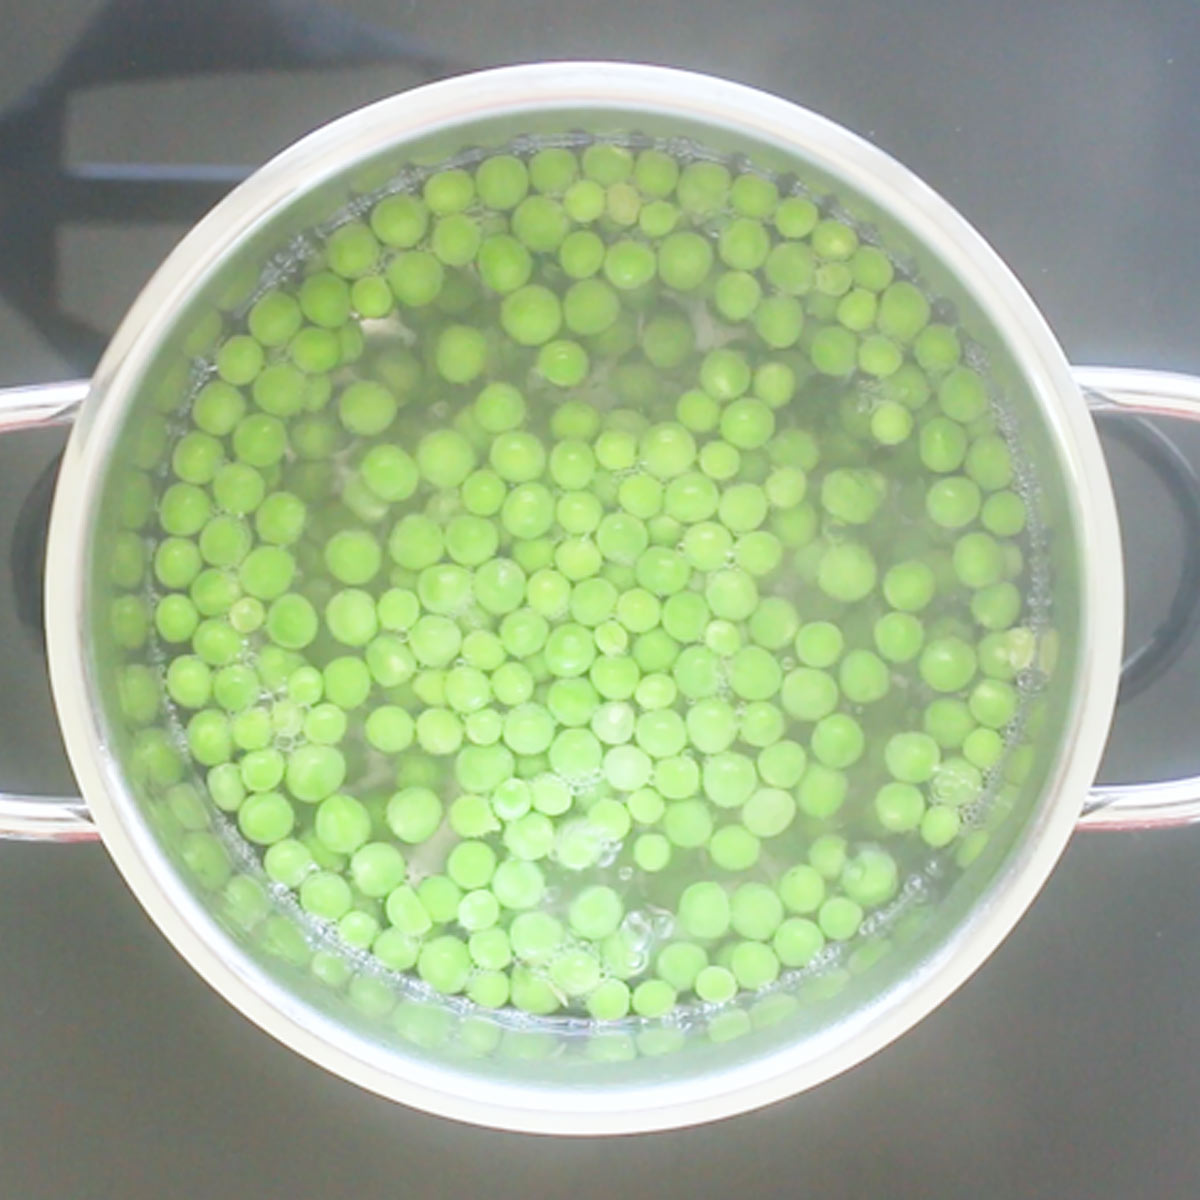 boil green peas soft